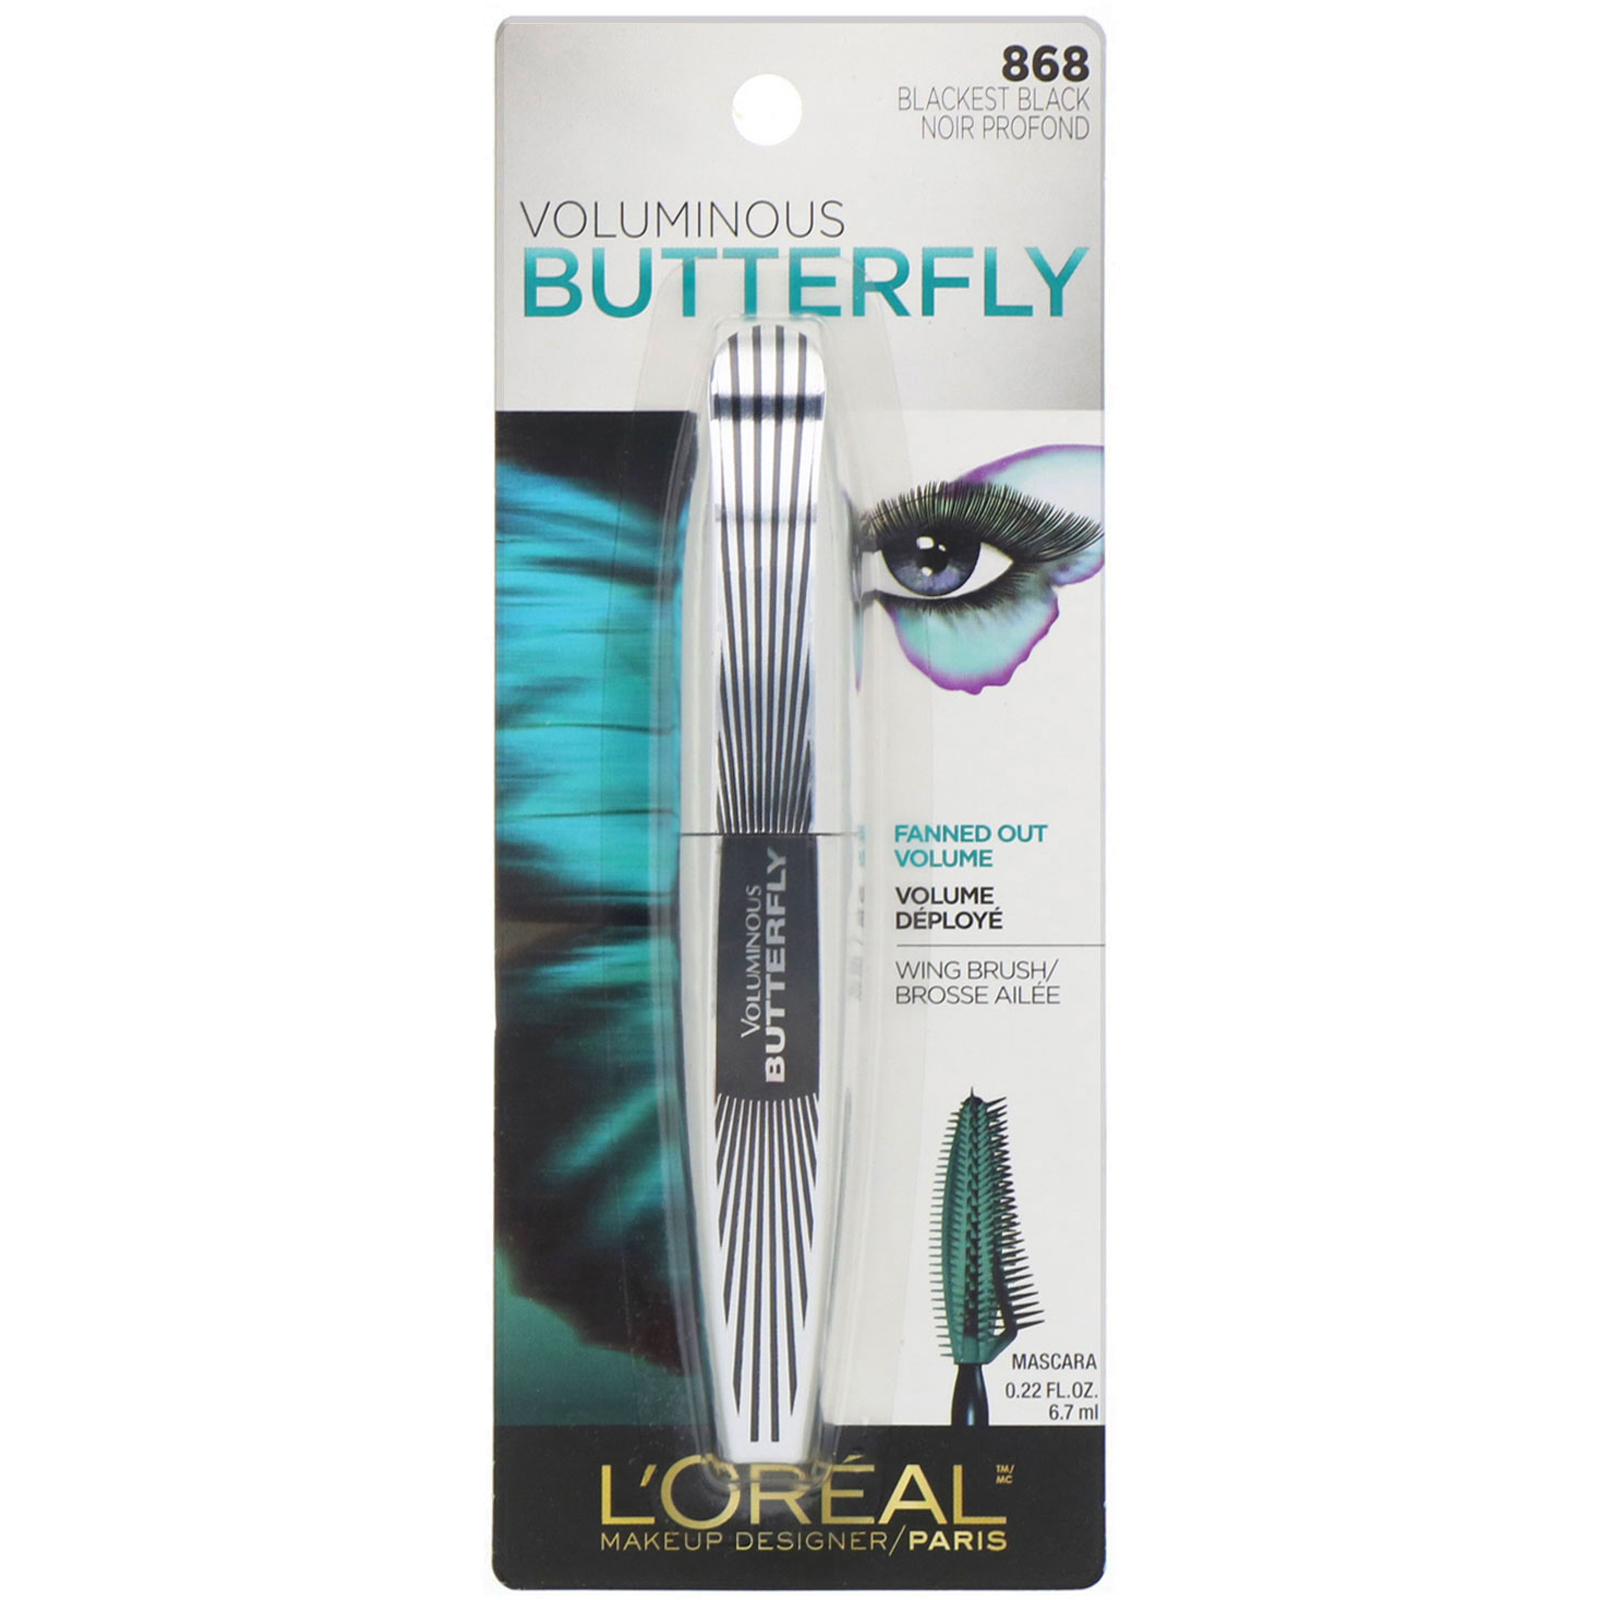 L'Oreal, Voluminous Butterfly Mascara, 868 Blackest Black, 0.22 fl oz ...